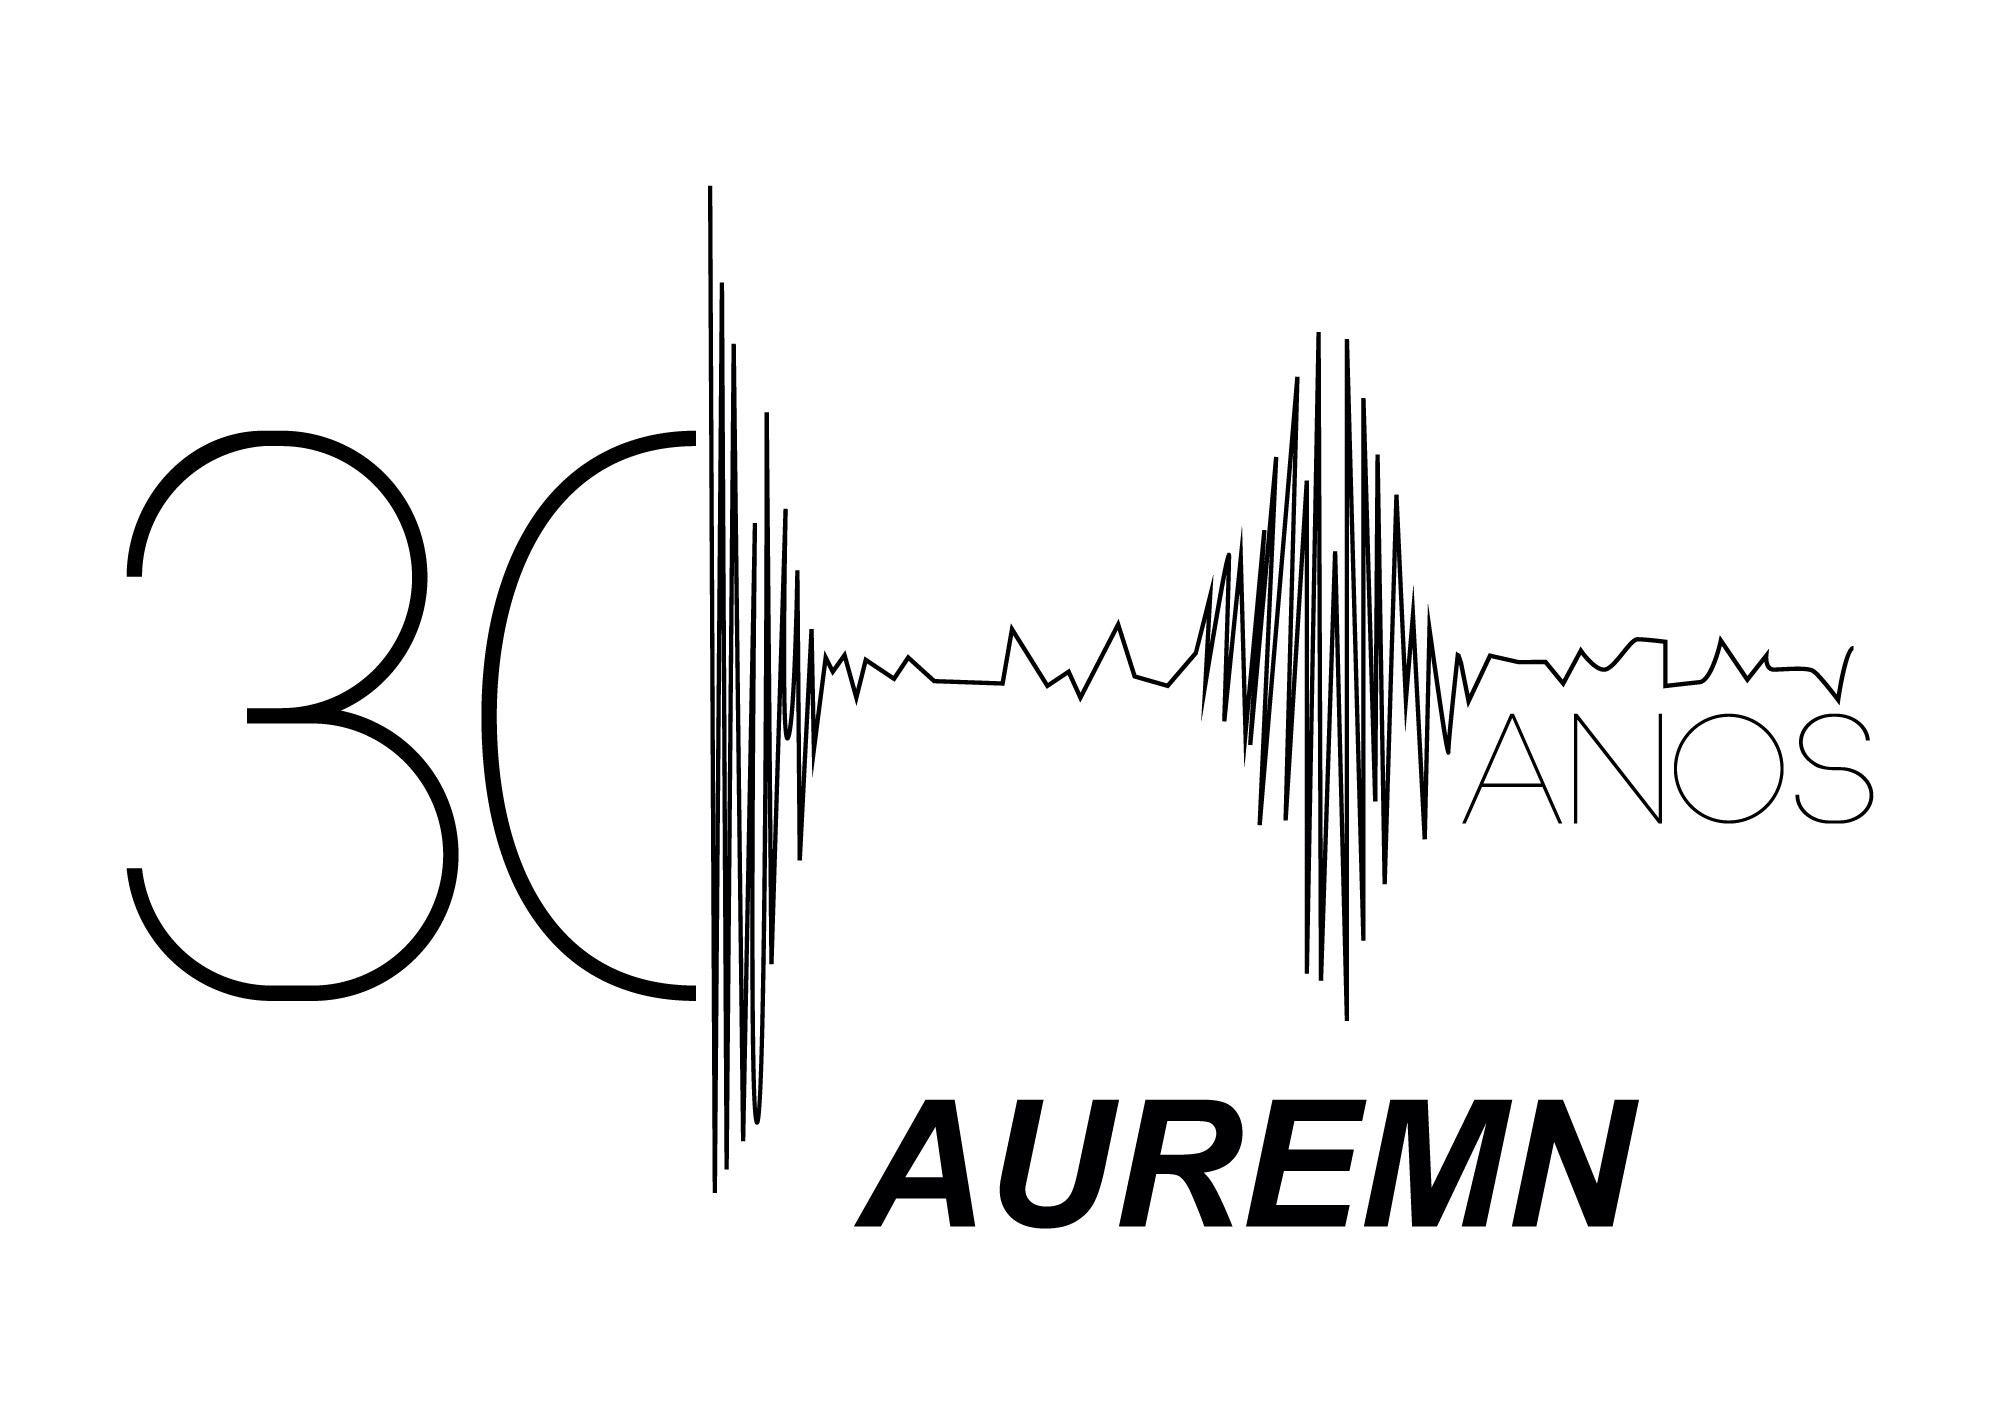 https://auremn.org/jornada2018/imgs/logo30anos.gif